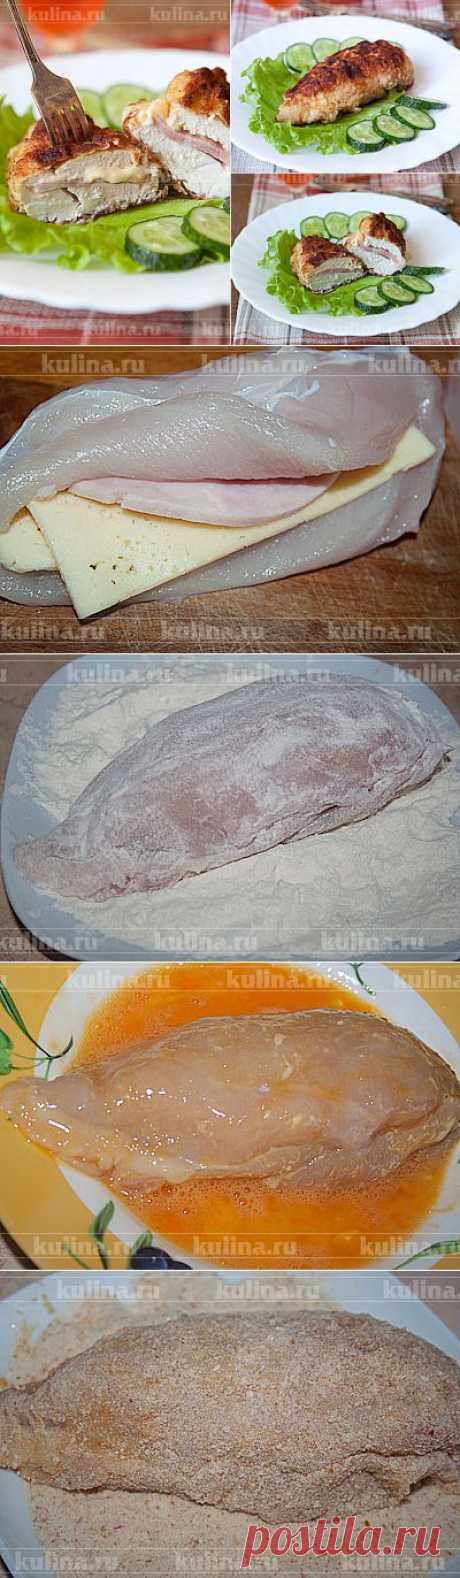 Кордон блю из курицы – рецепт приготовления с фото от Kulina.Ru